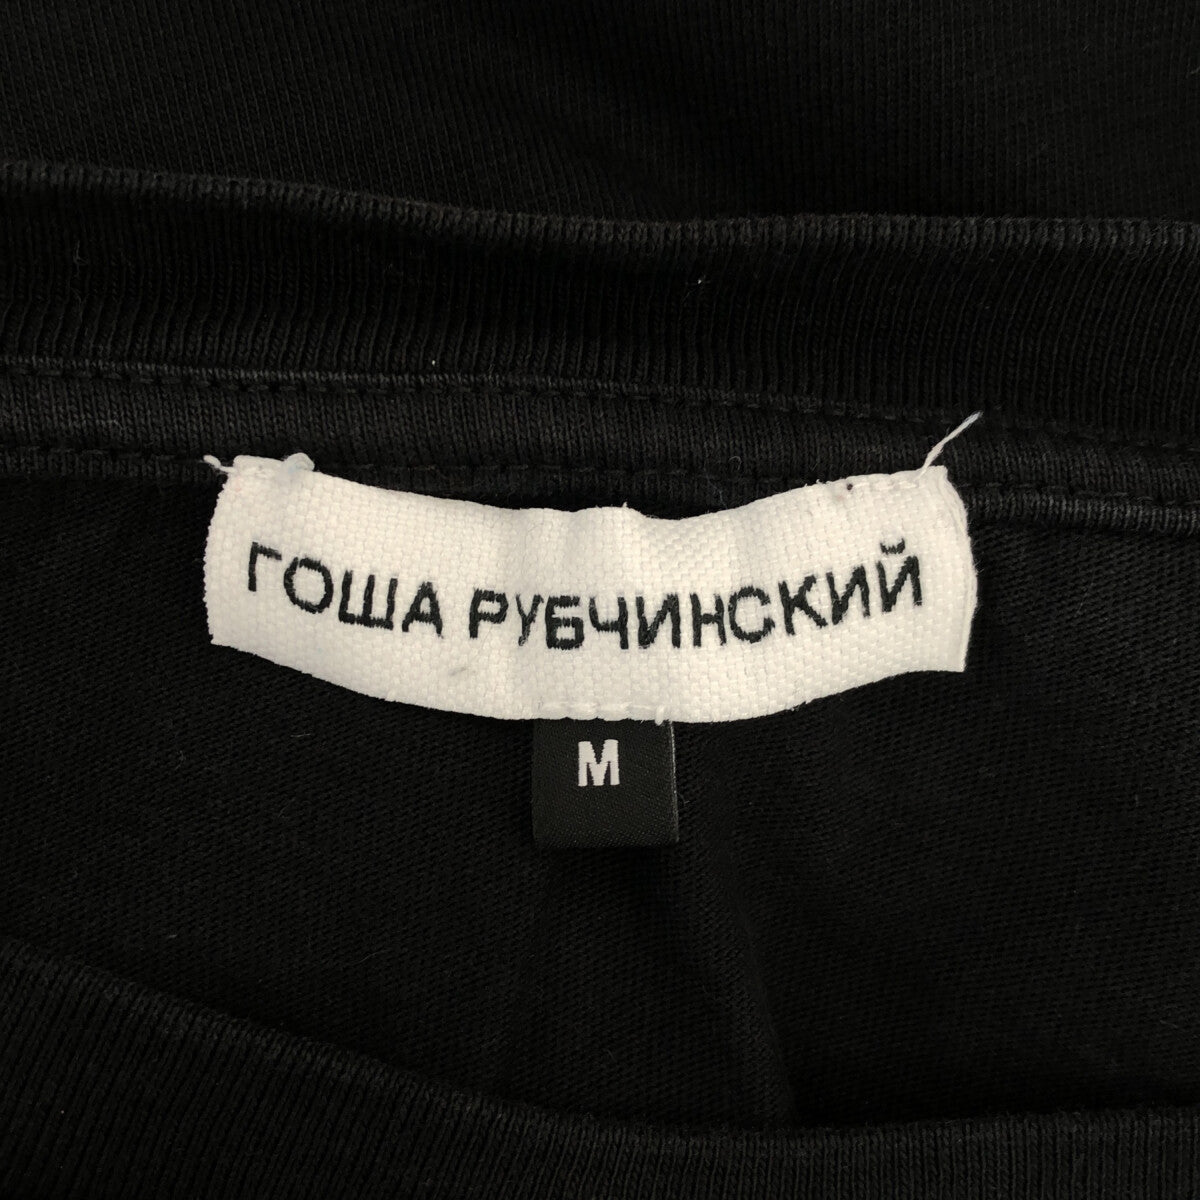 ROWA PY64NHCKNN/Gosha Rubchinskiy / ロワゴーシャラブチンスキー | ロゴプリント Tシャツ | M | メンズ